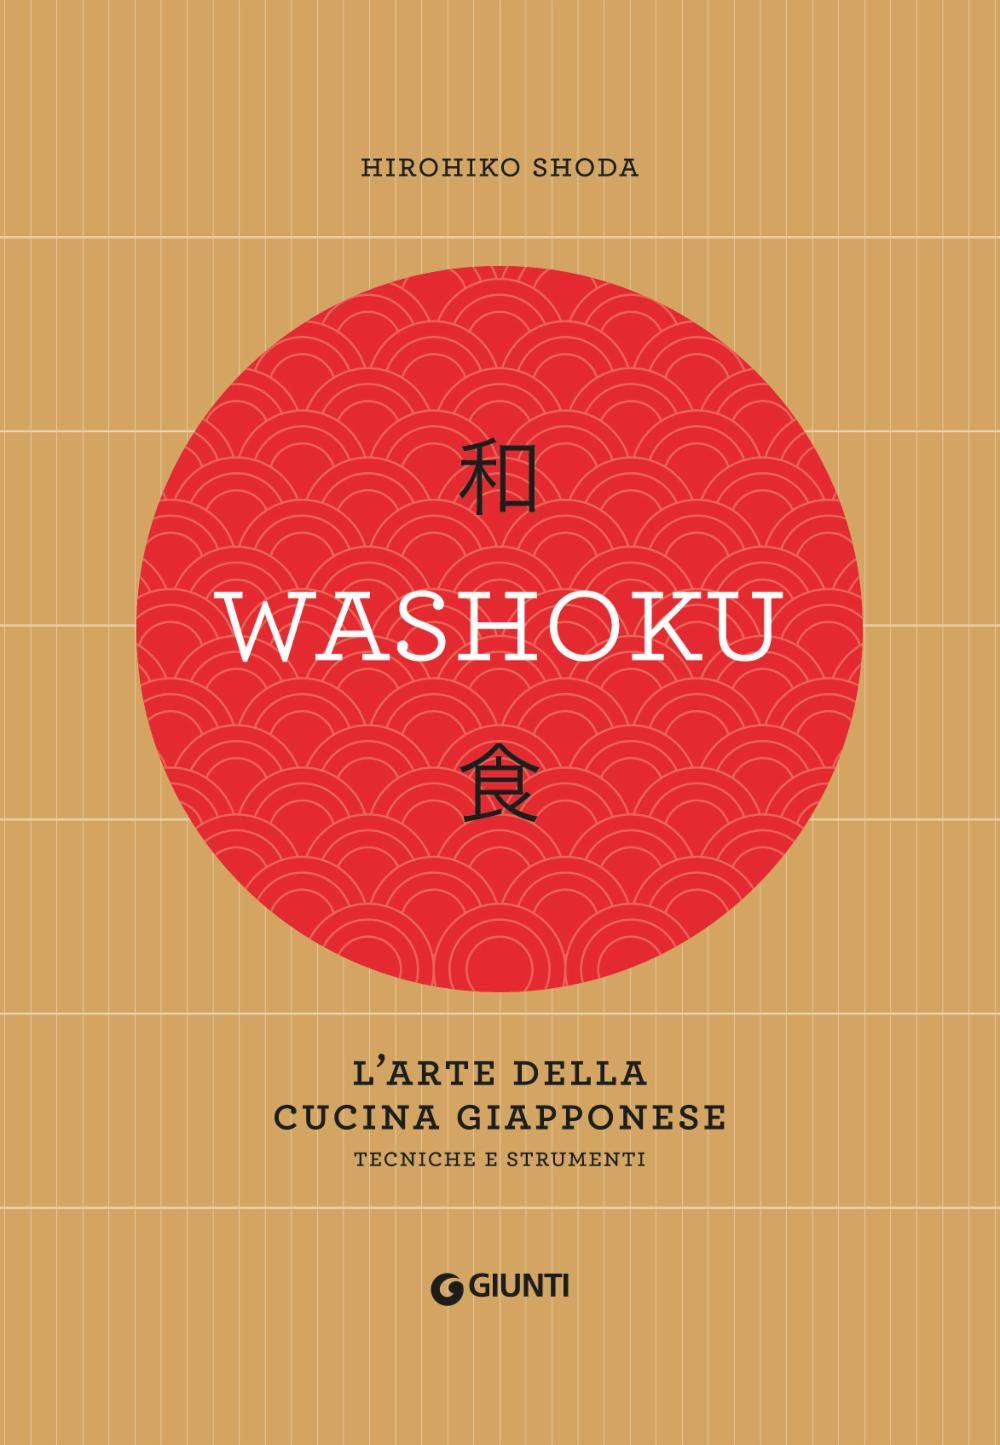 migliore cucina giapponese - washaku